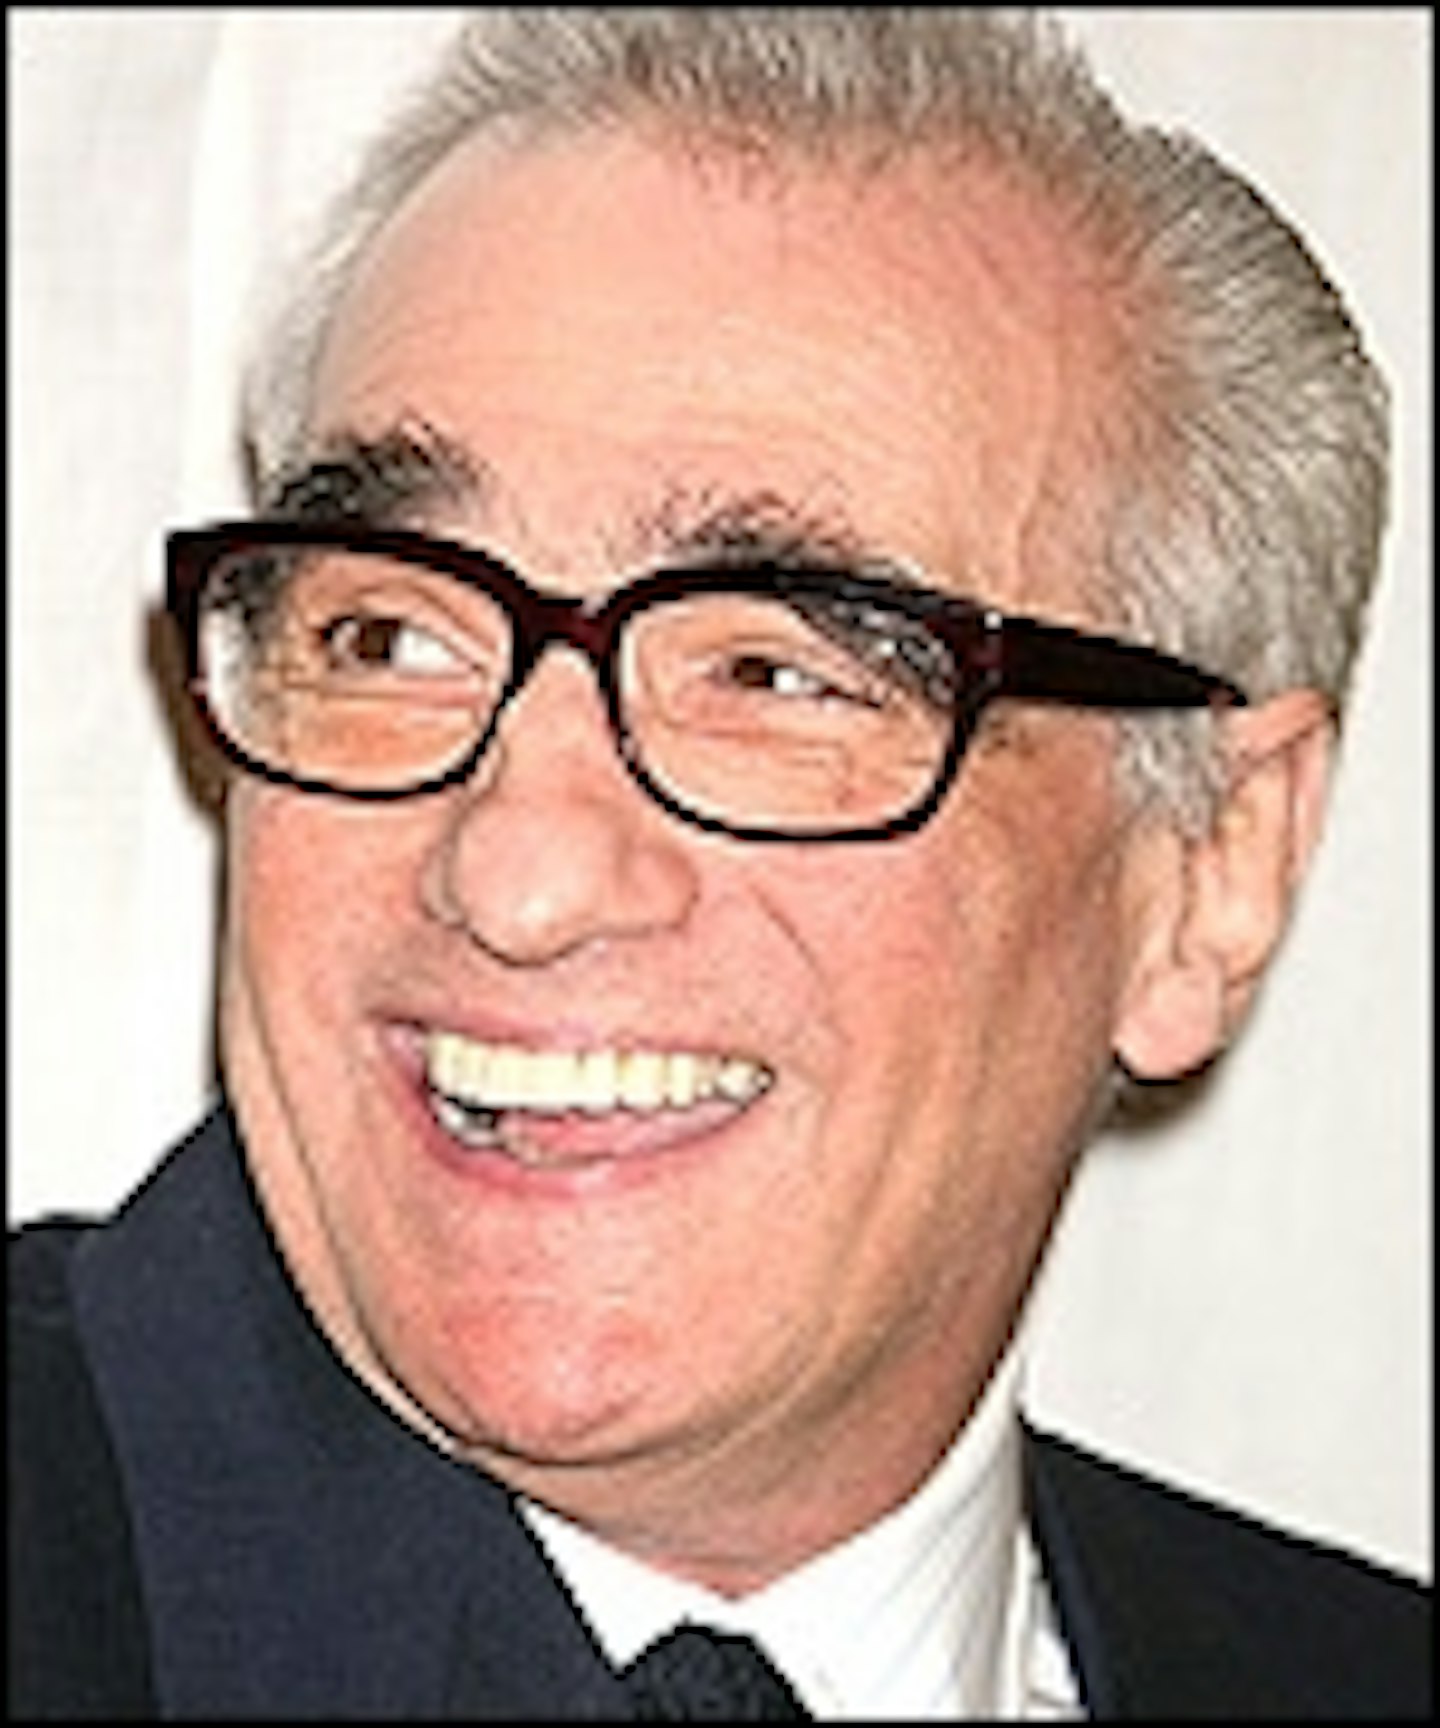 Scorsese TV Show Gets Green Light